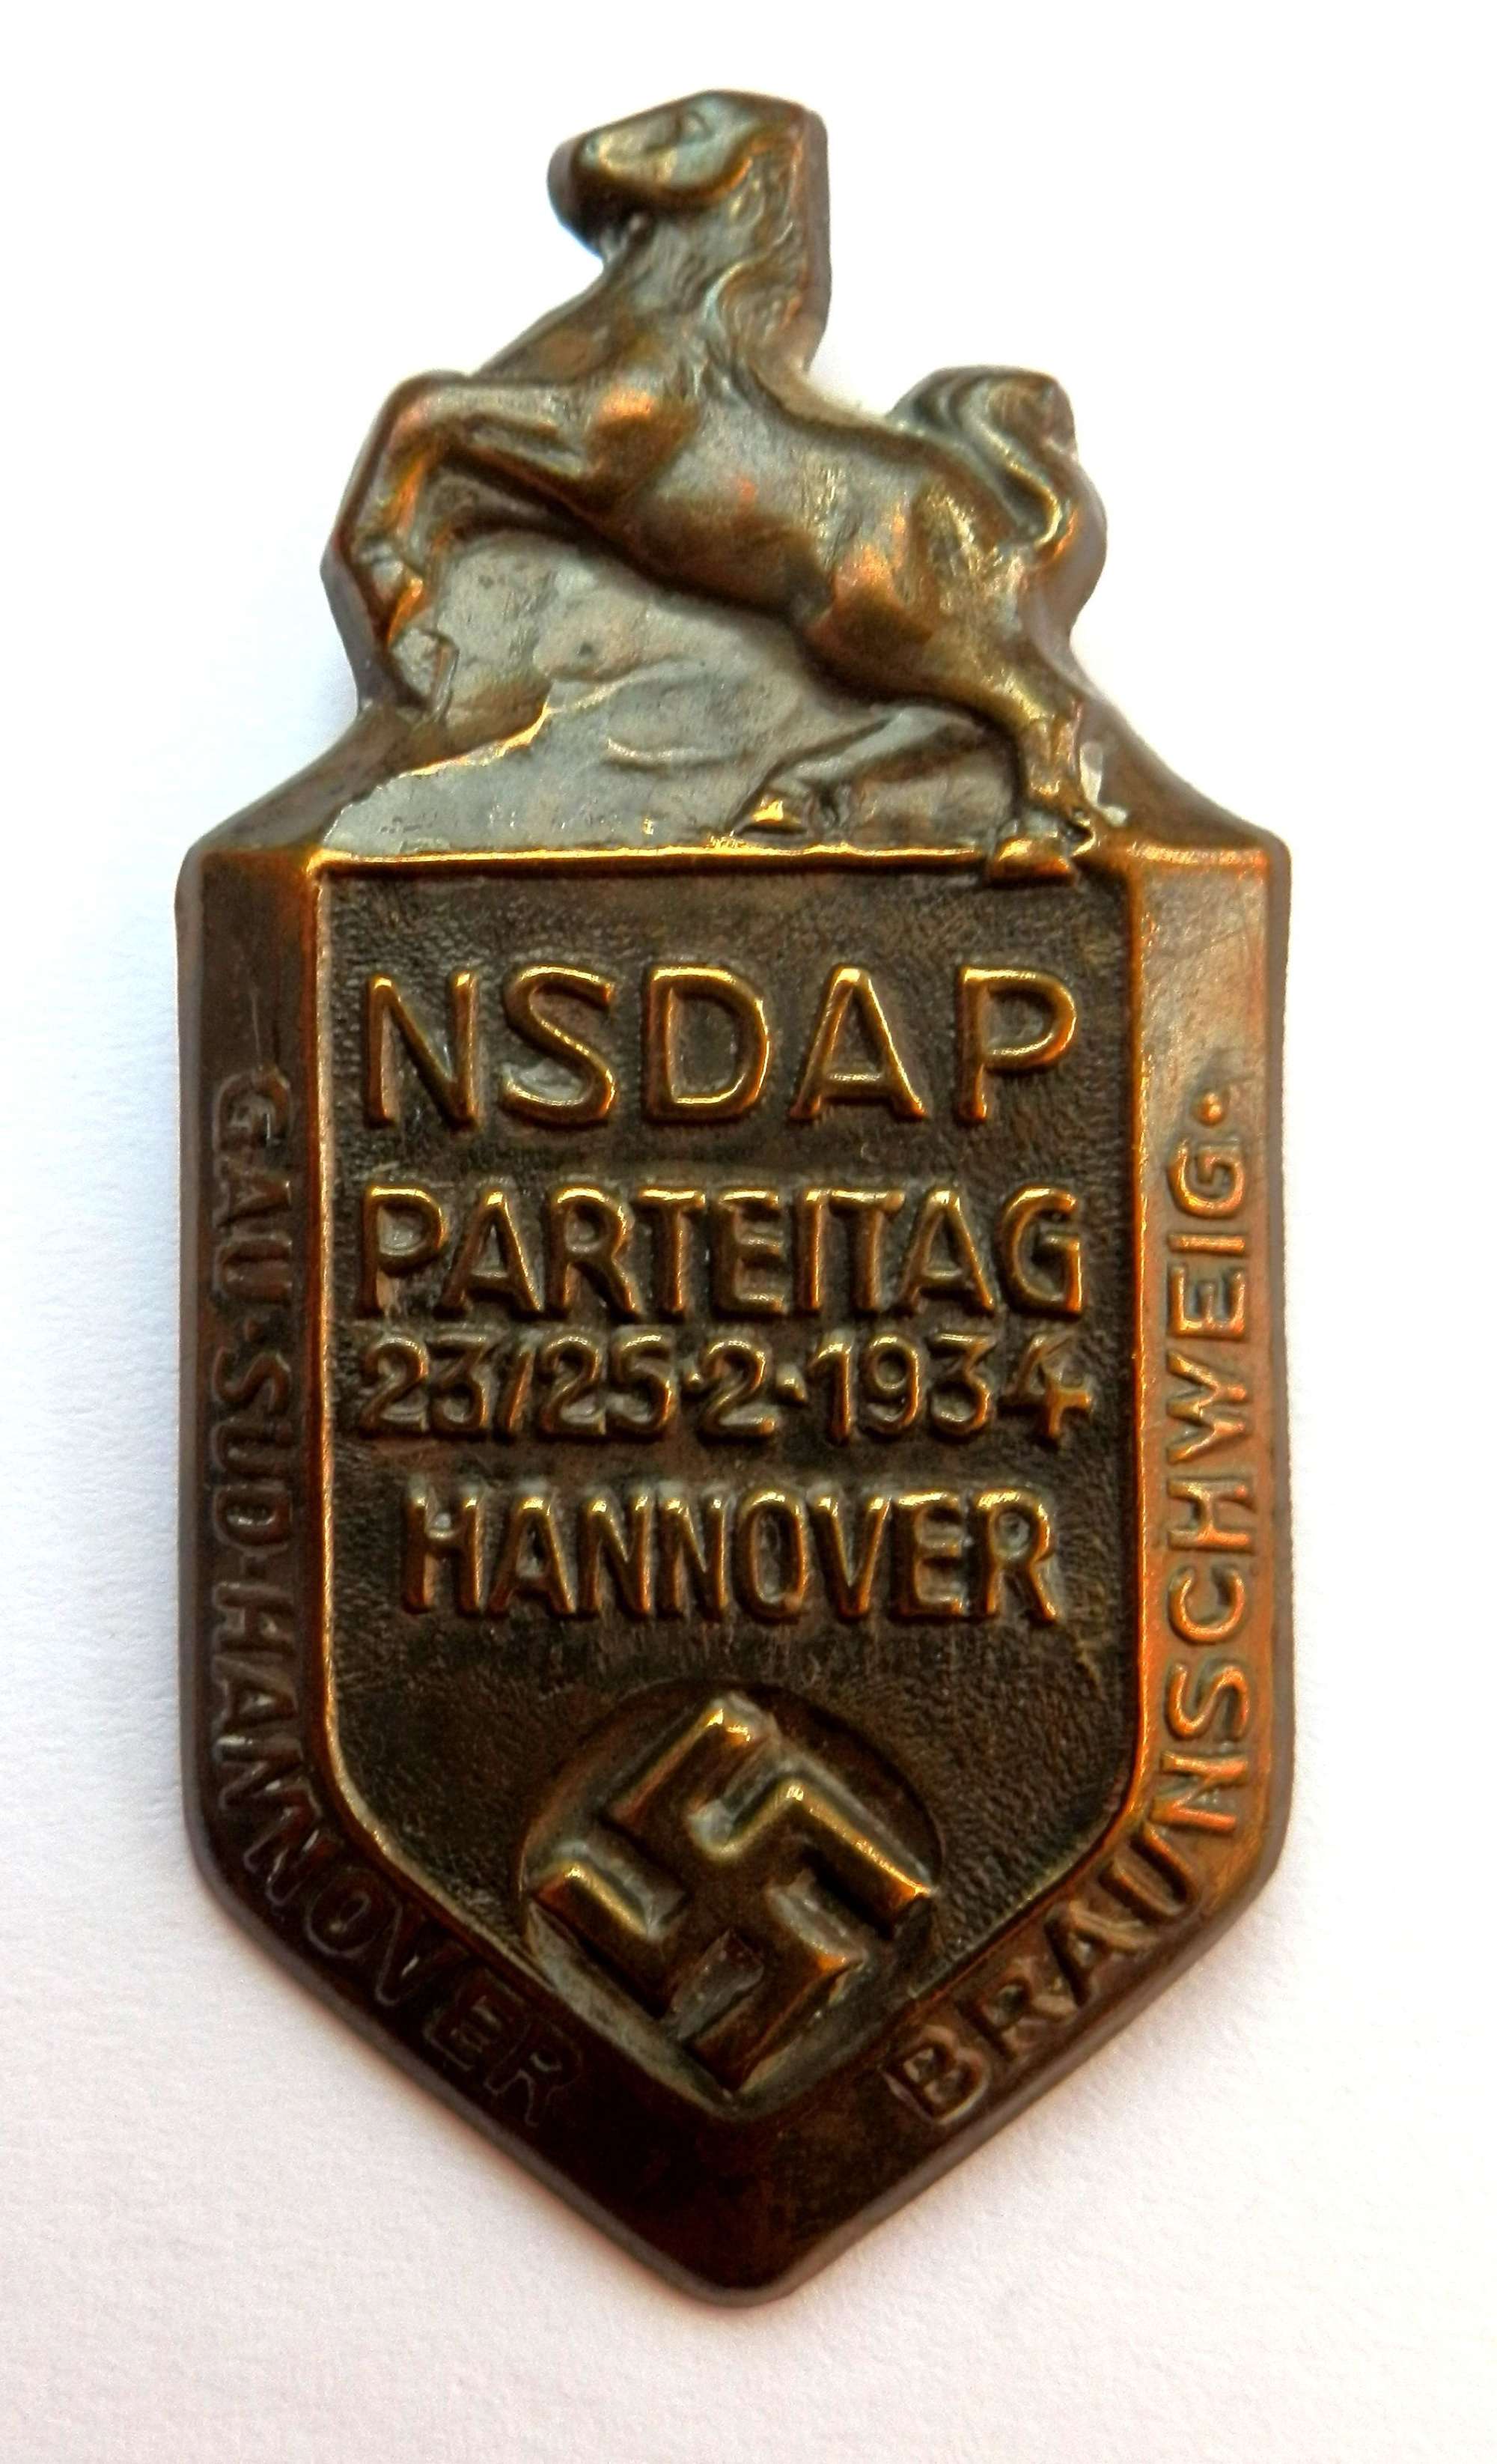 NSDAP Parteitag 23/25.2.1934 Hannover Pin Badge